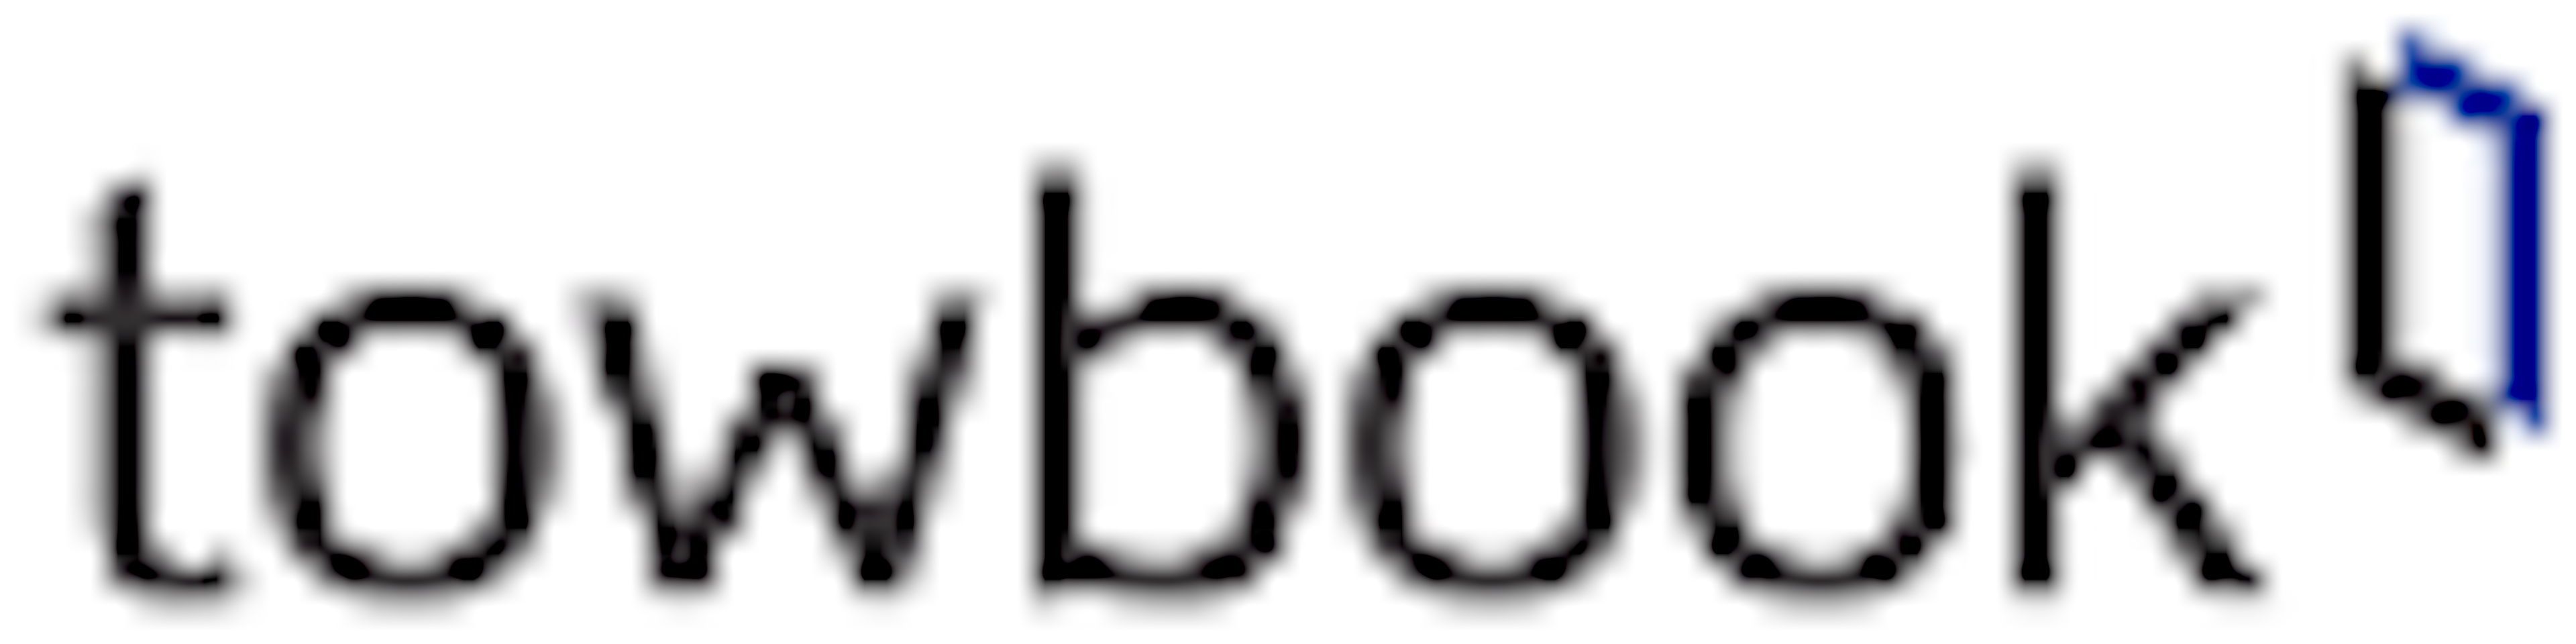 Towbook Management Software Logo